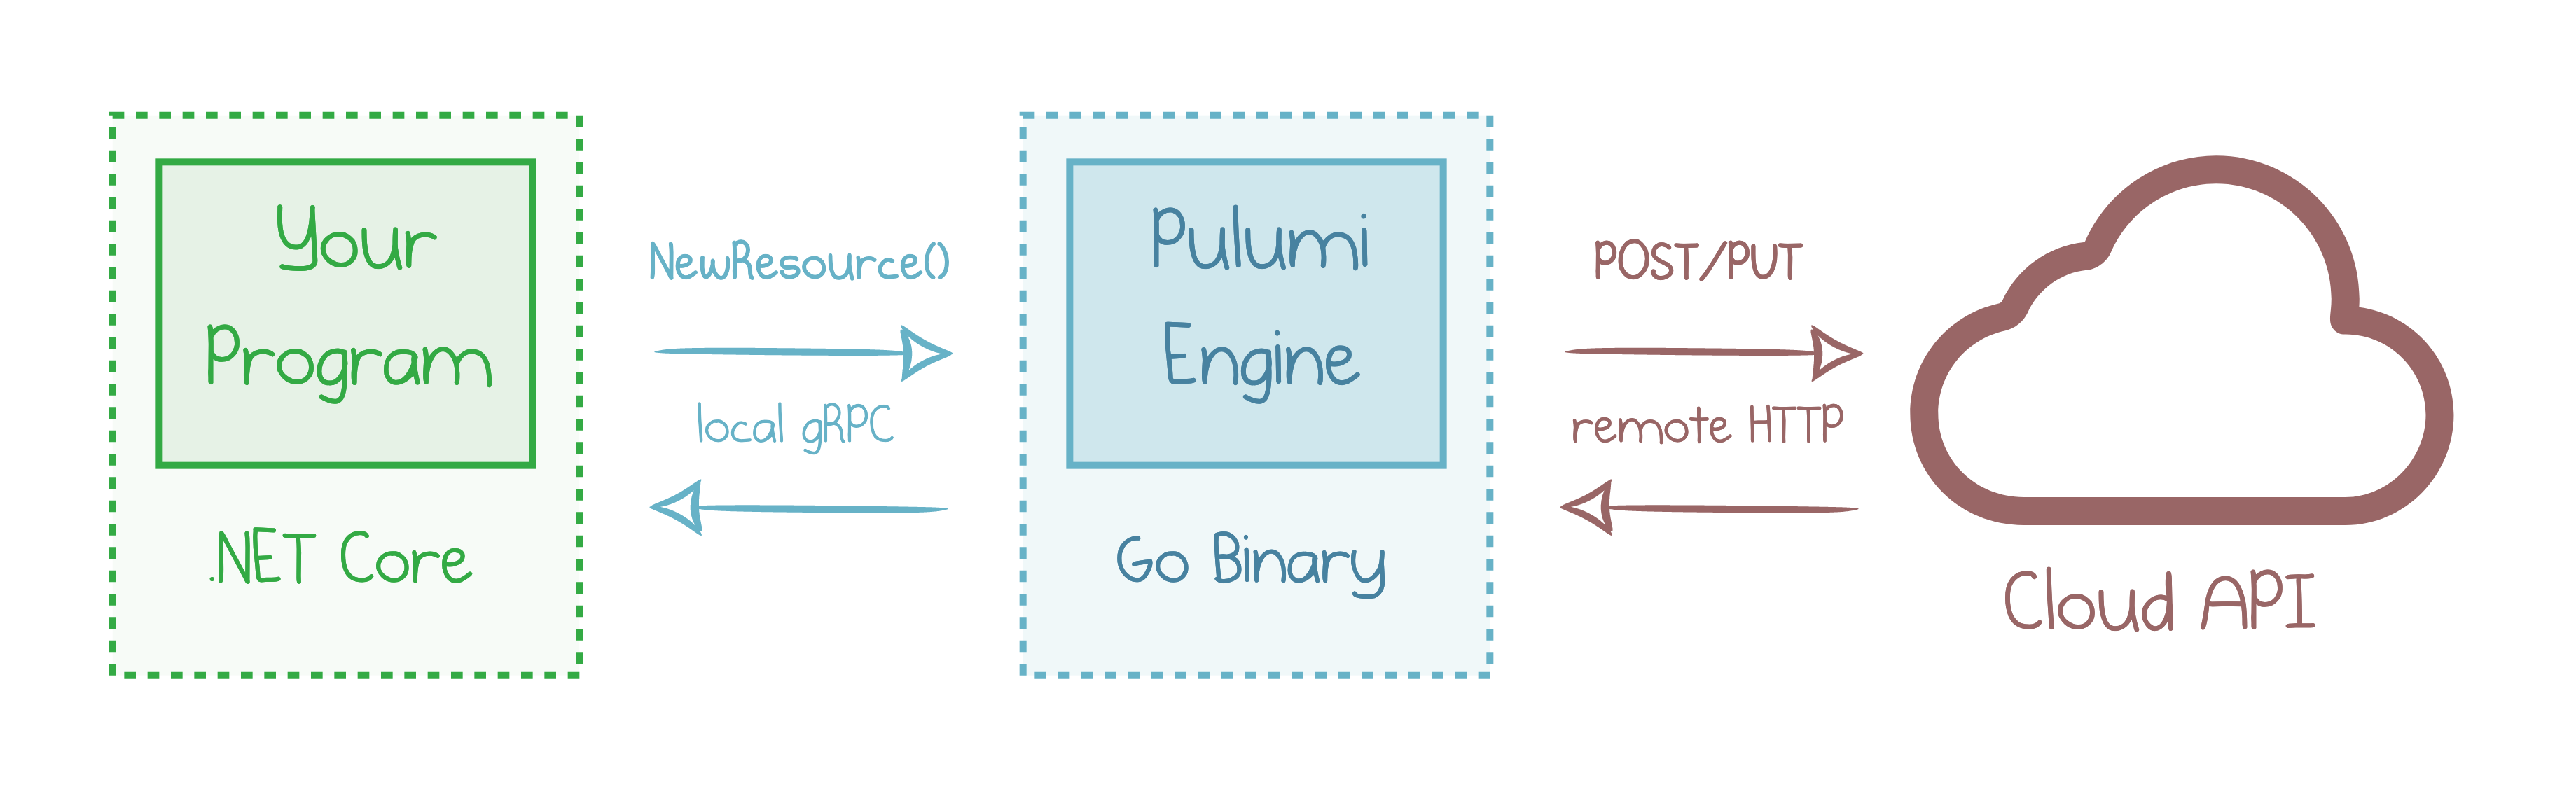 Pulumi Components Interaction